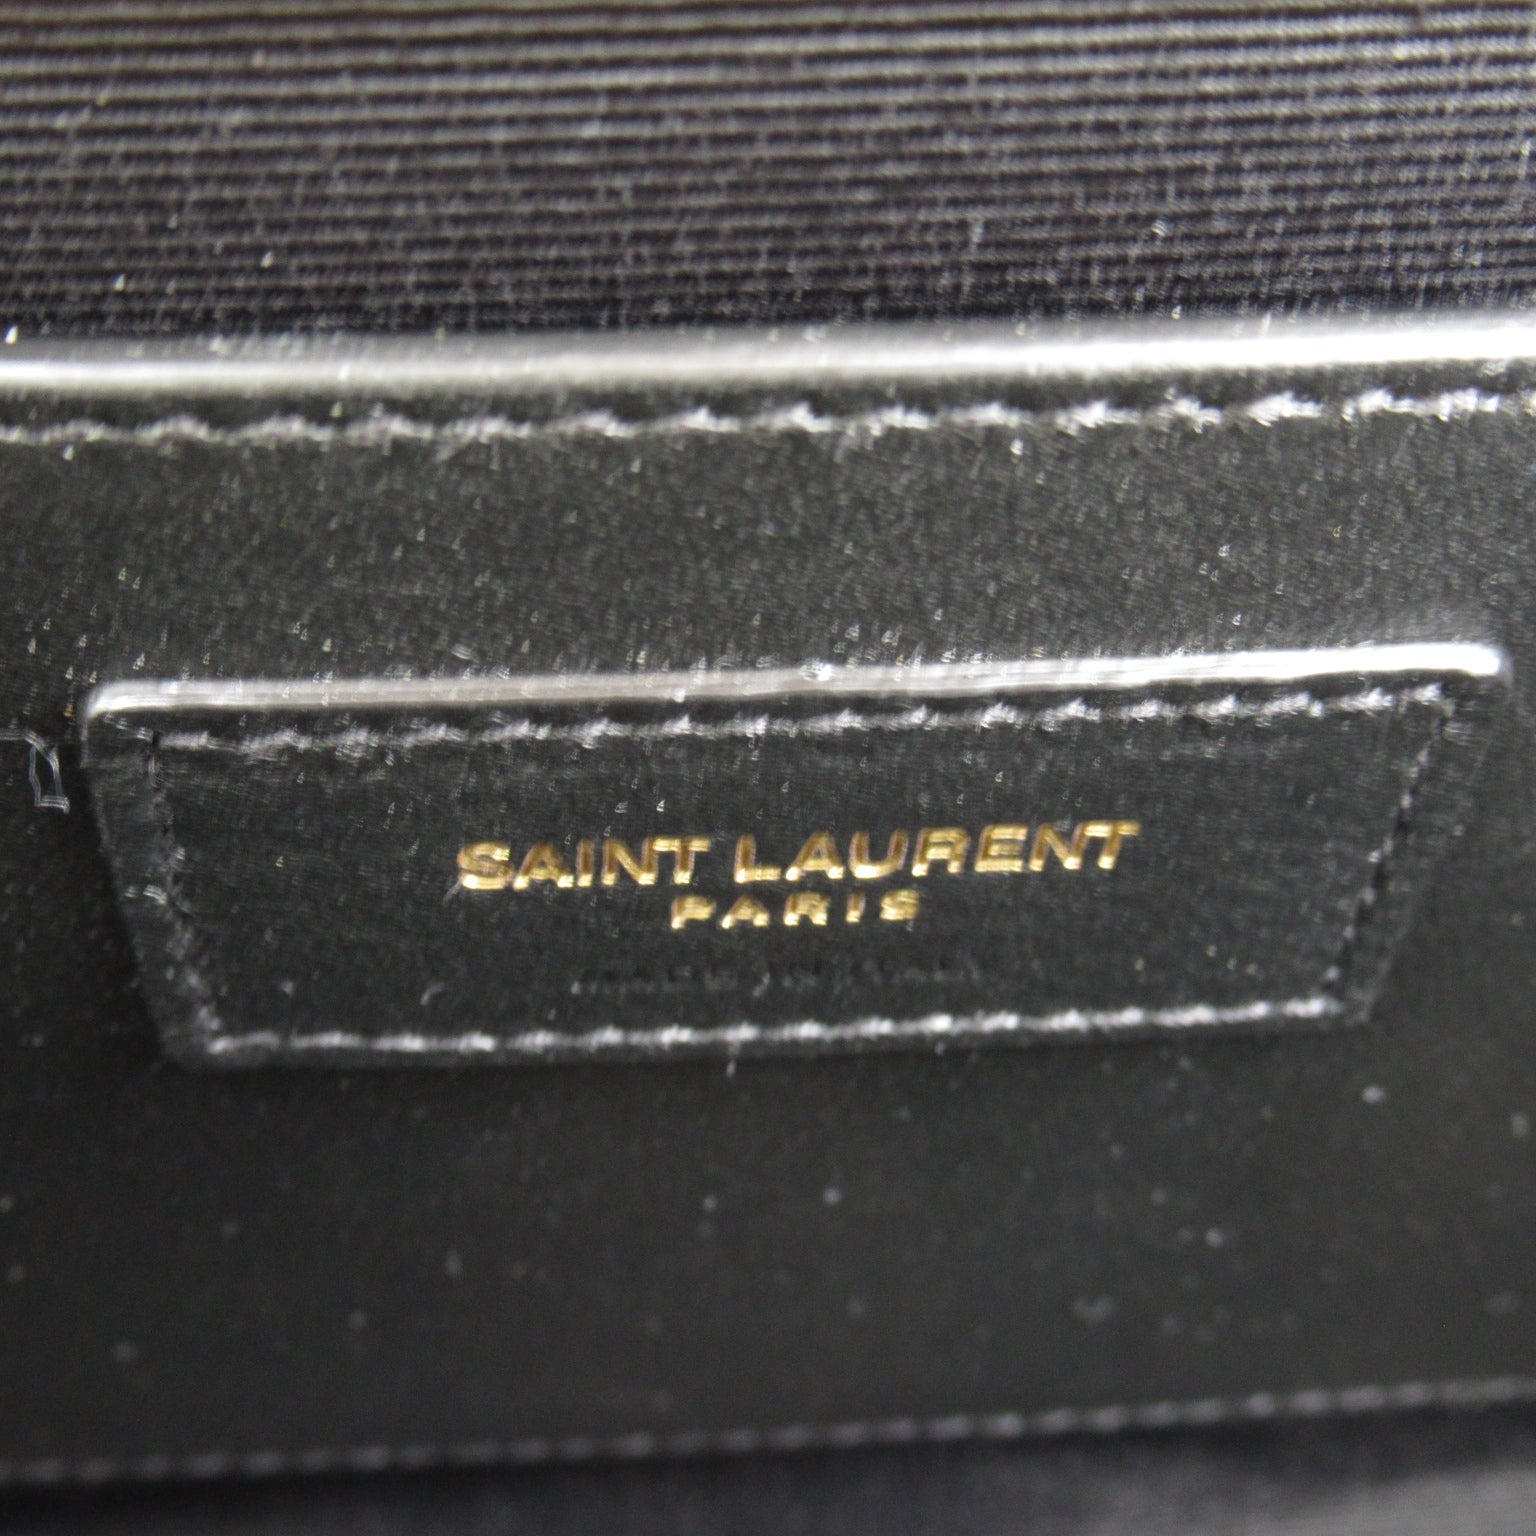 Saint Laurent Chain Shoulder Bag Leather Bag Beige  600185BOW912721